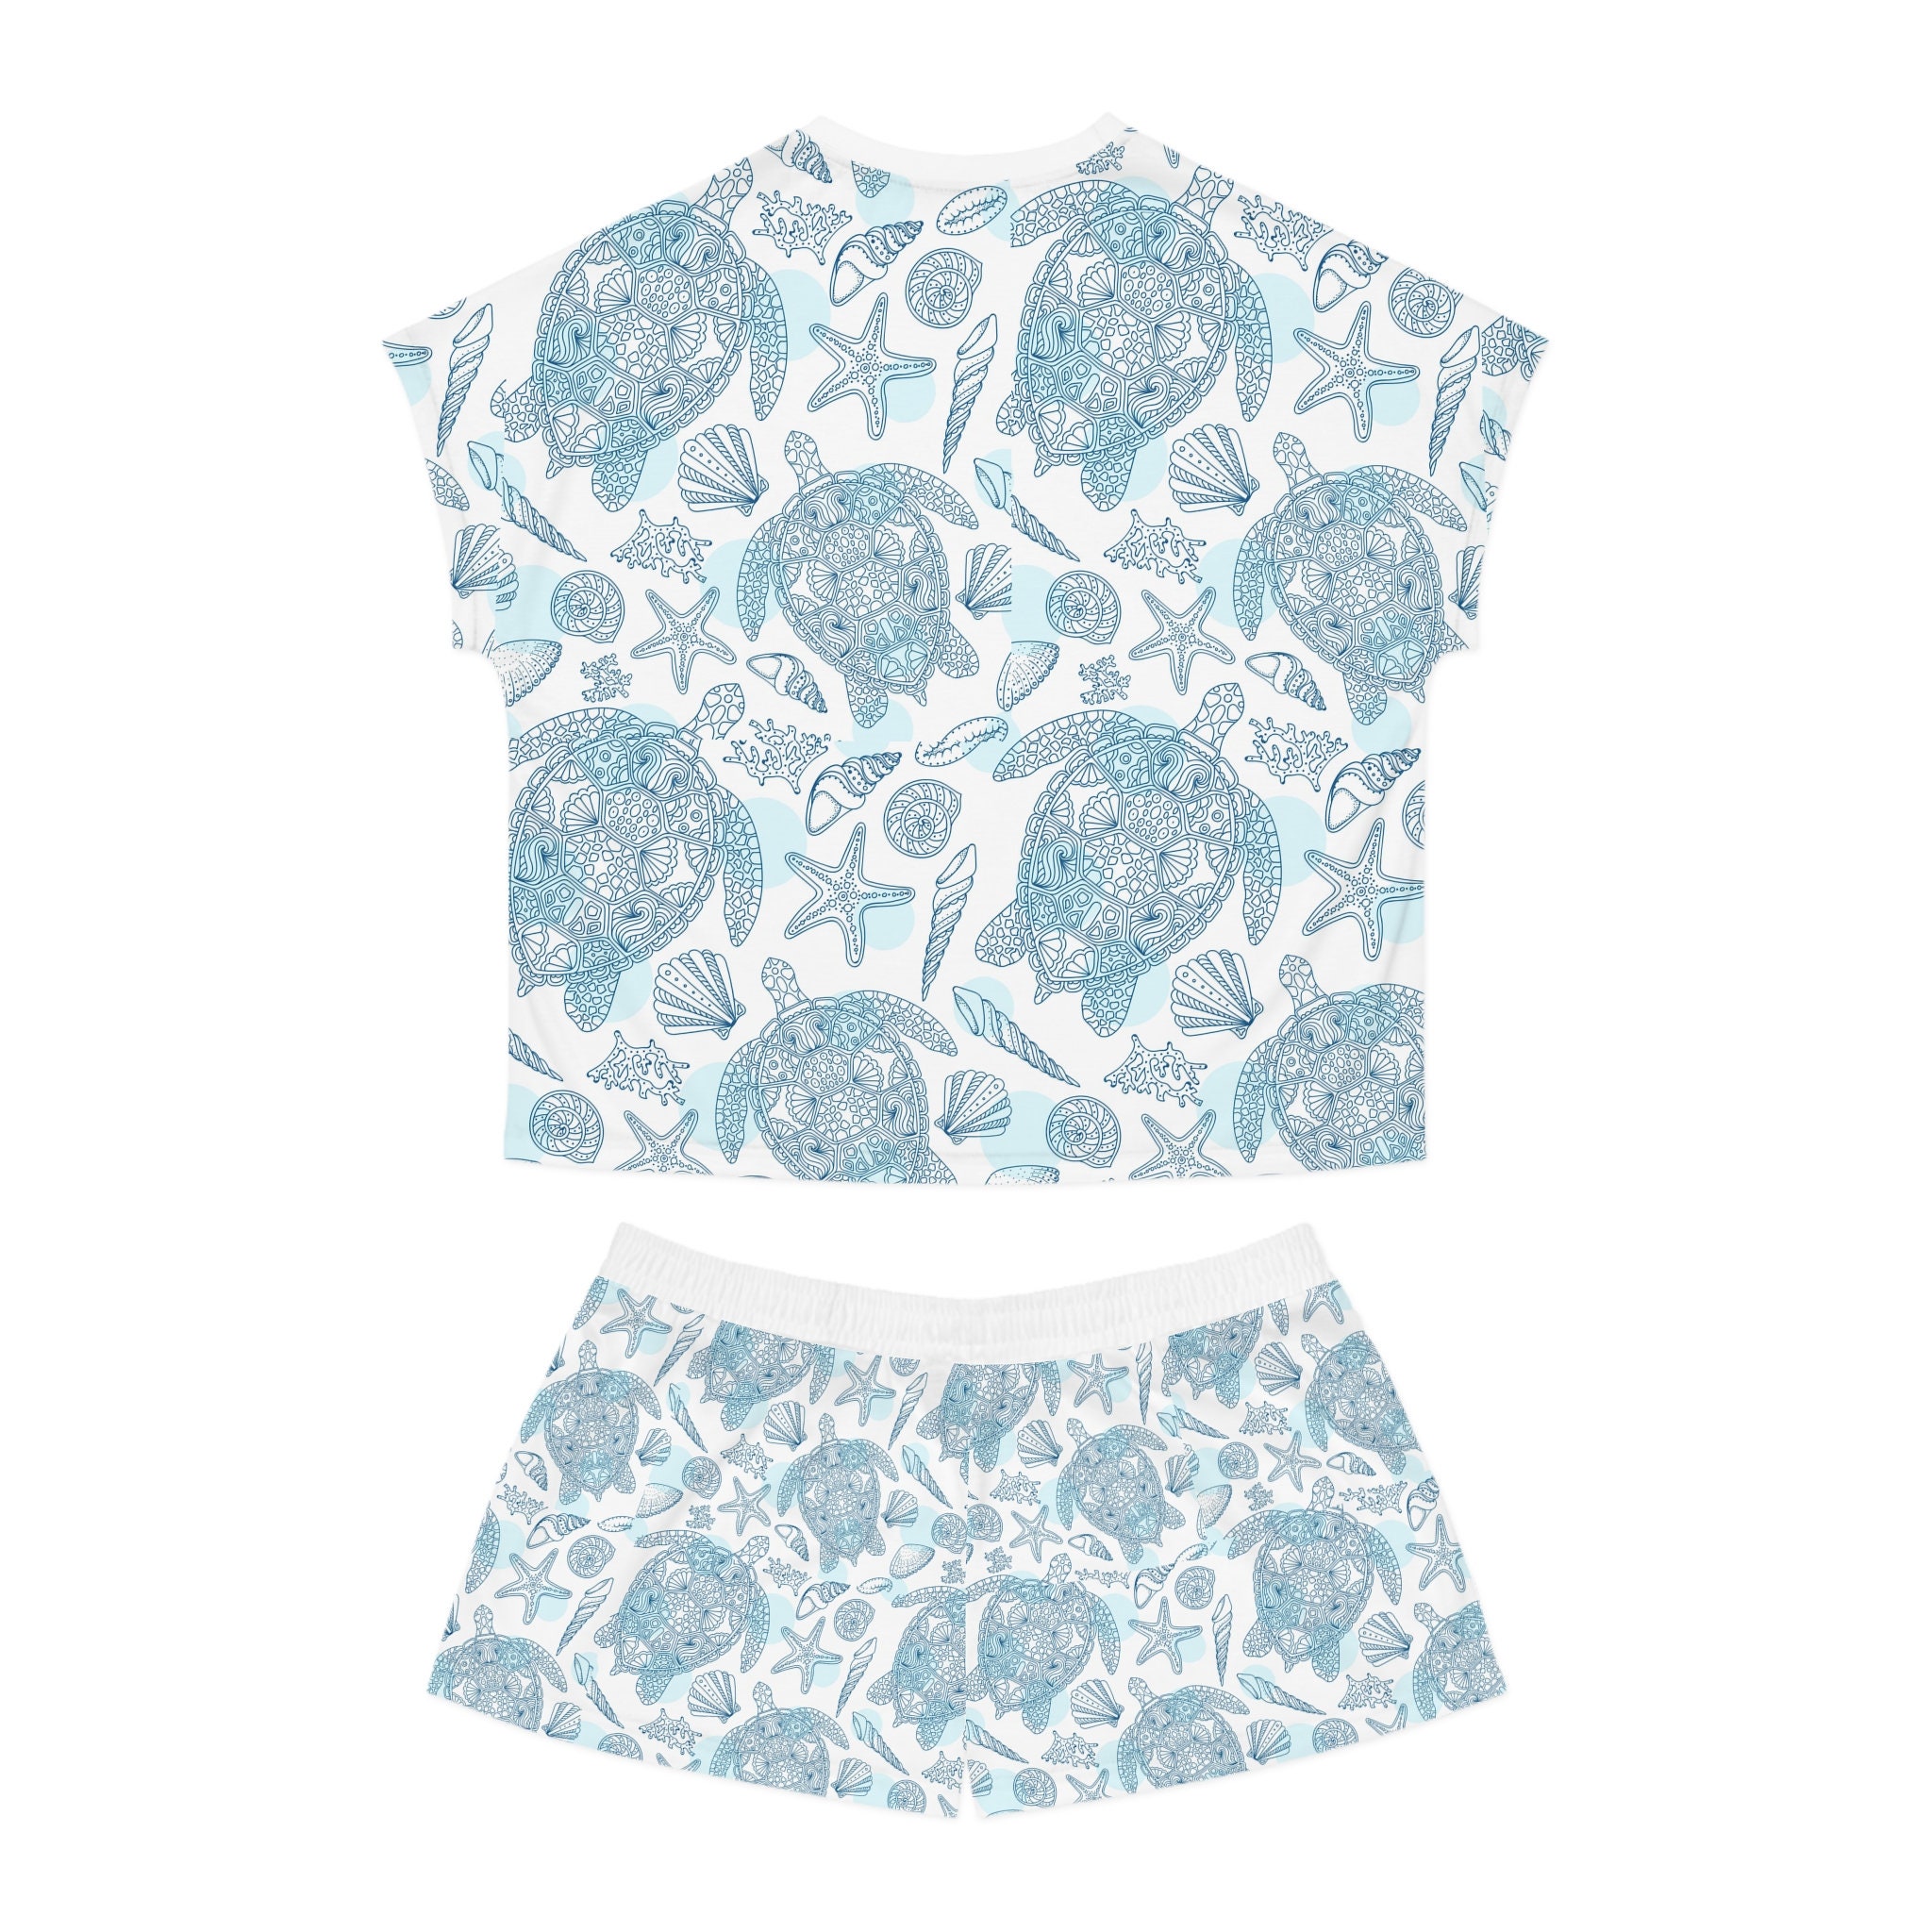 Pastel Blue Sea Turtles Pajamas Set, Women Sleepwear